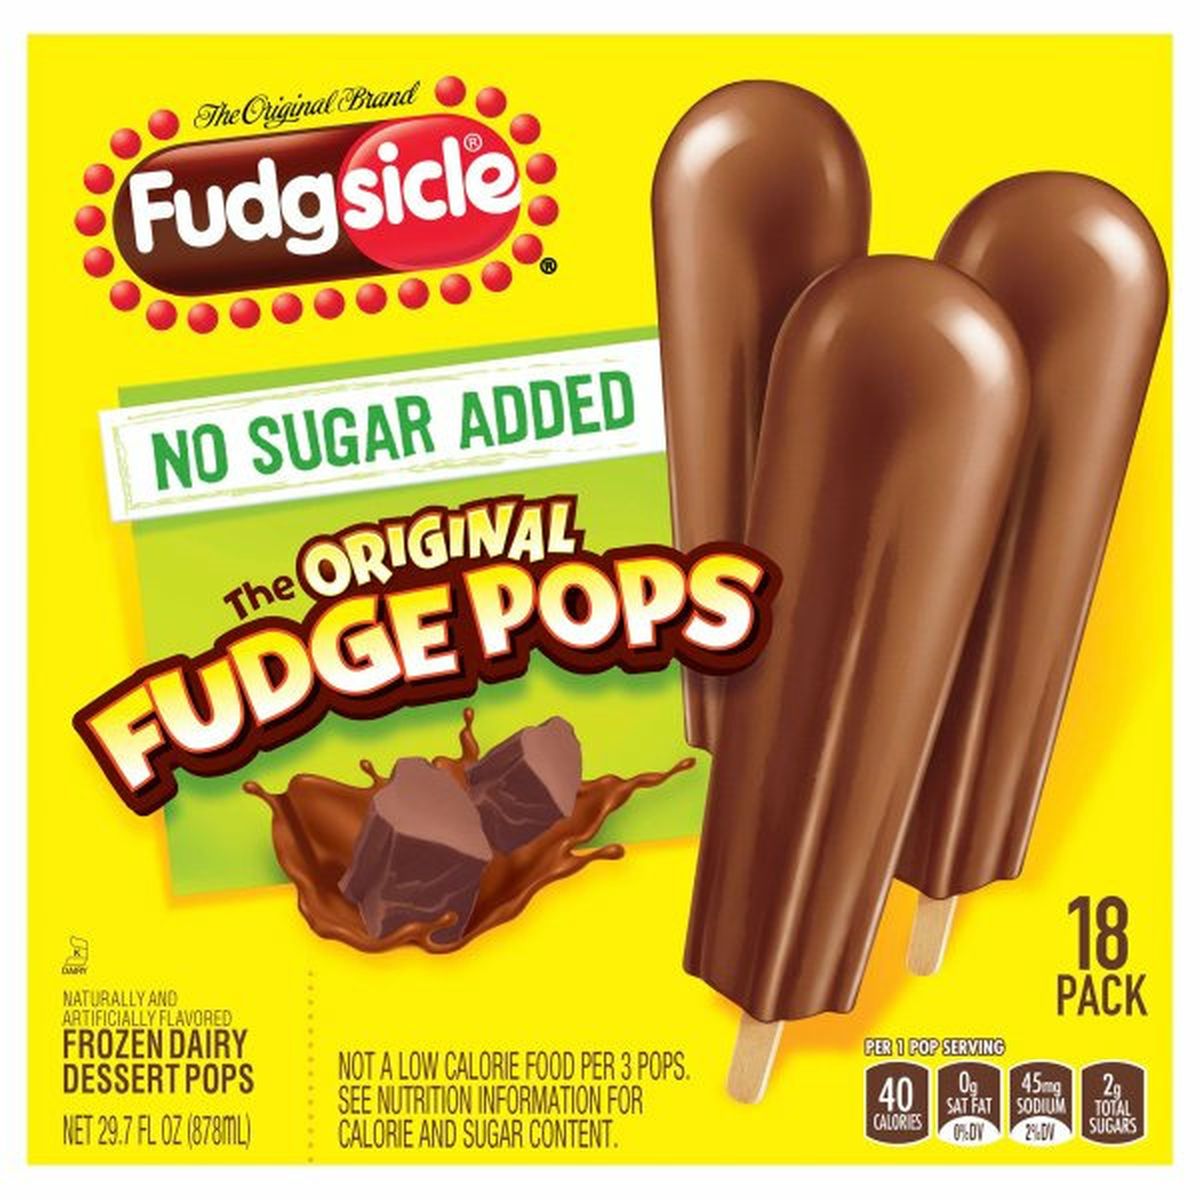 Calories in Popsicle Frozen Dairy Dessert Pops, No Sugar Added, The Original Fudge Pops, 18 Pack